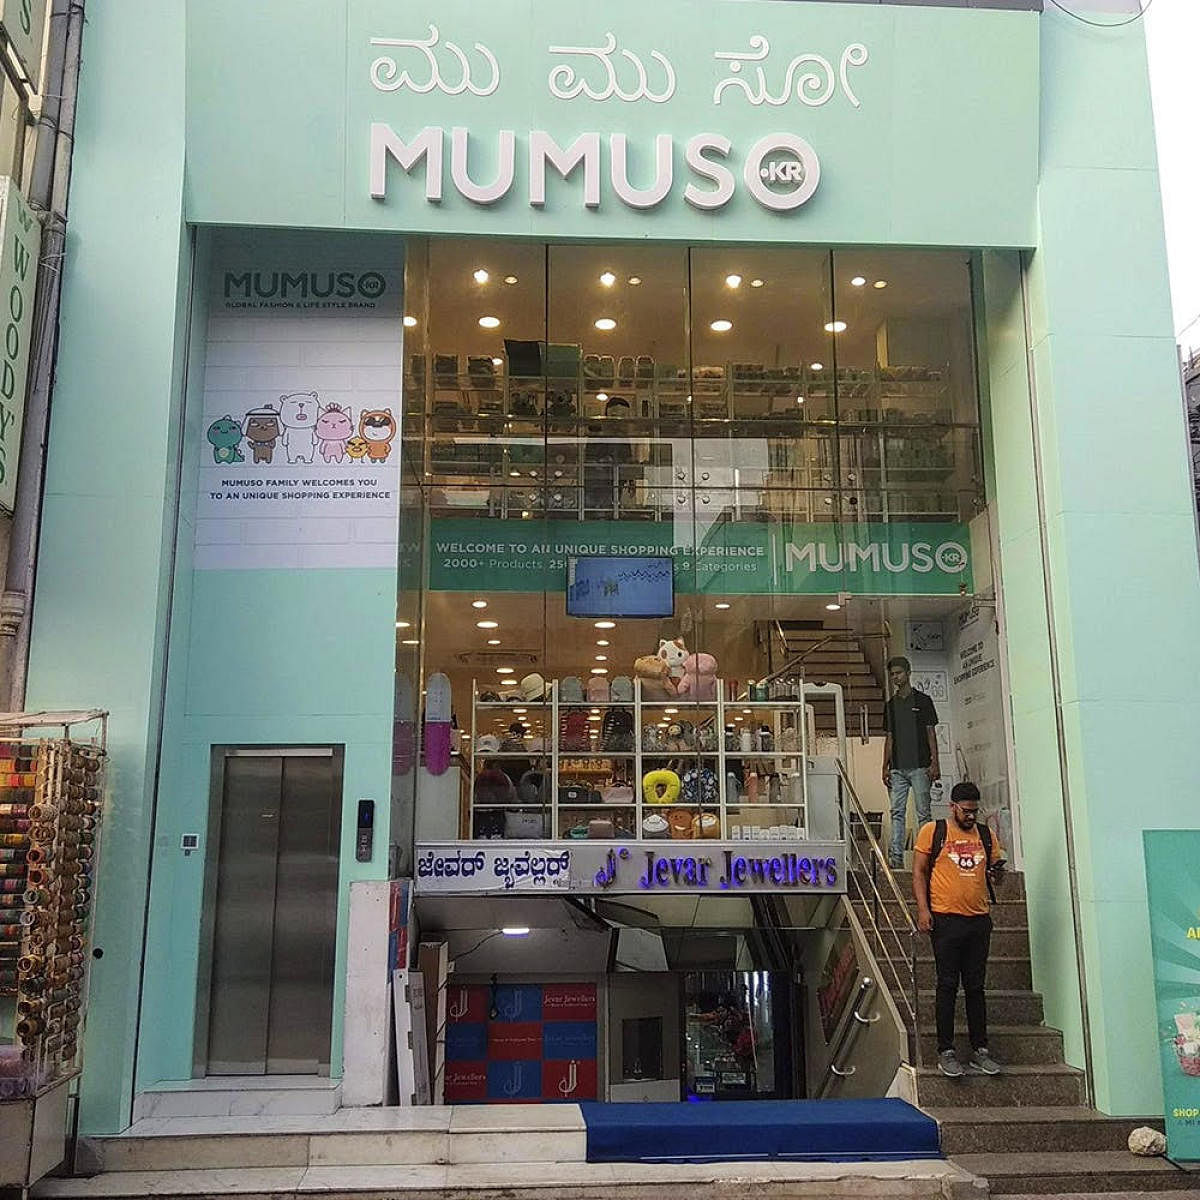 The Korean store 'Mumuso' on Commercial Street.